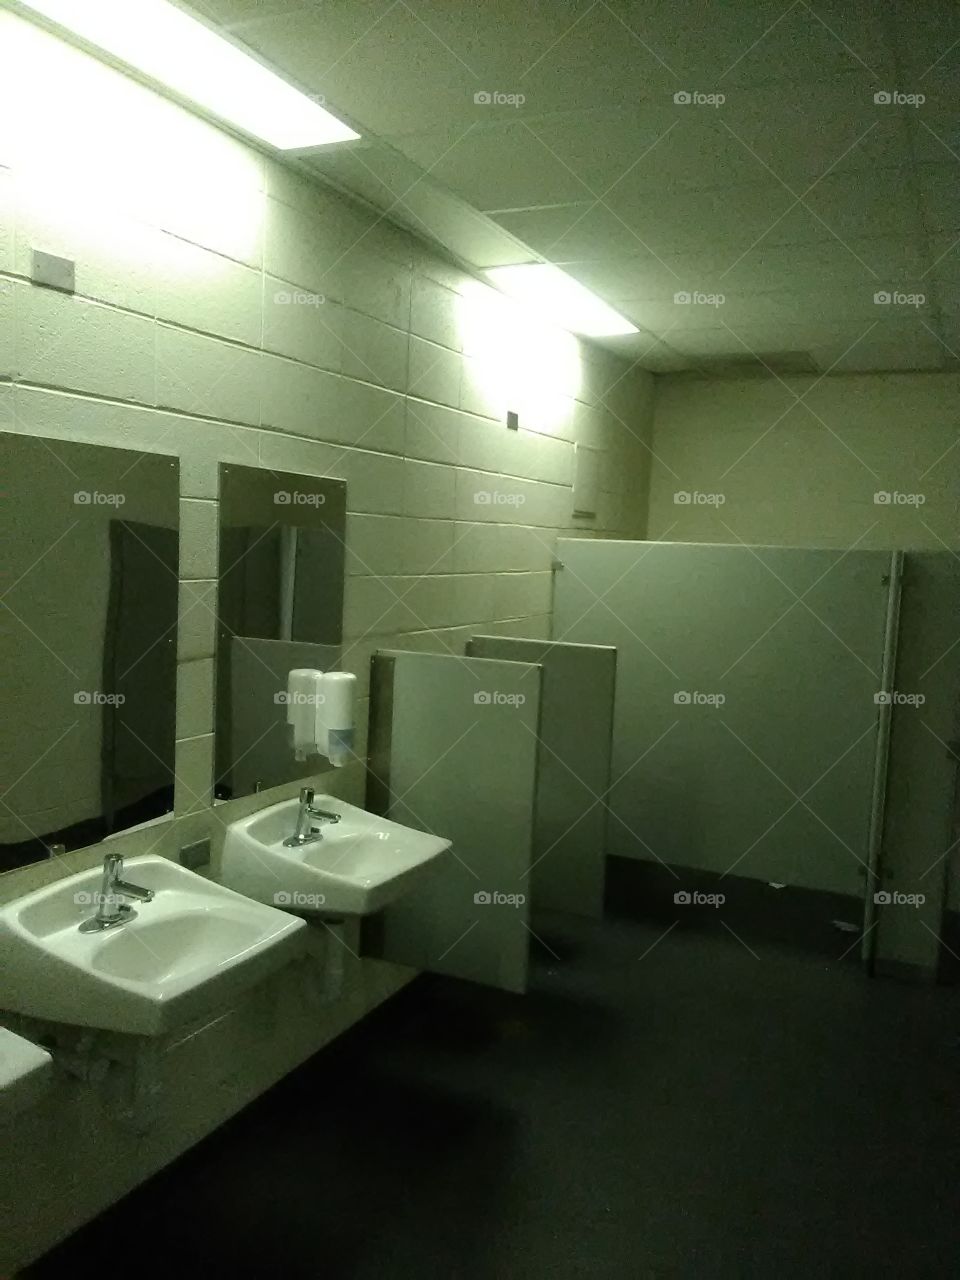 Stadium  "Authorized Personal" Bathroom.